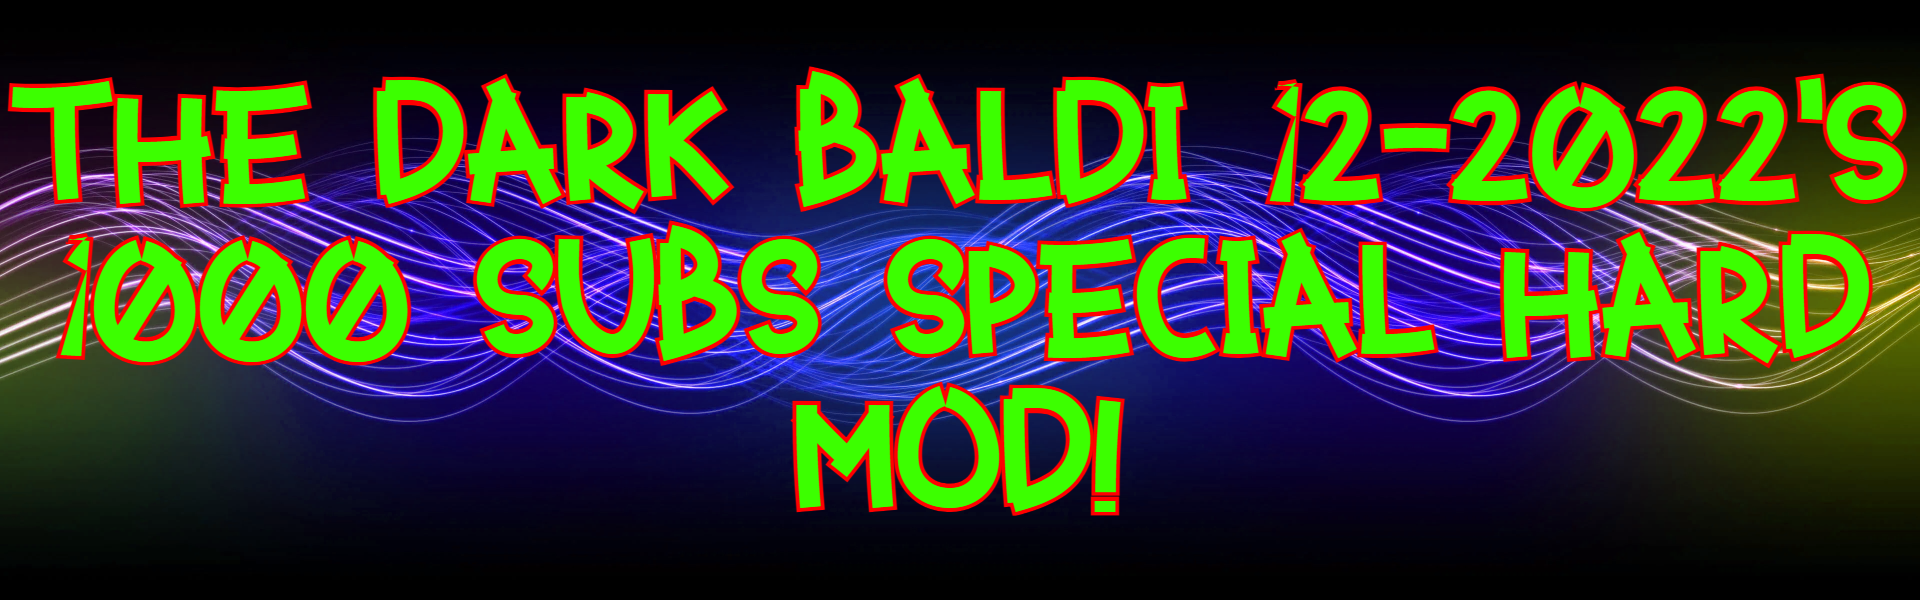 THE DARK BALDI 12-2022'S 1000 SUBS SPECIAL HARD MOD!